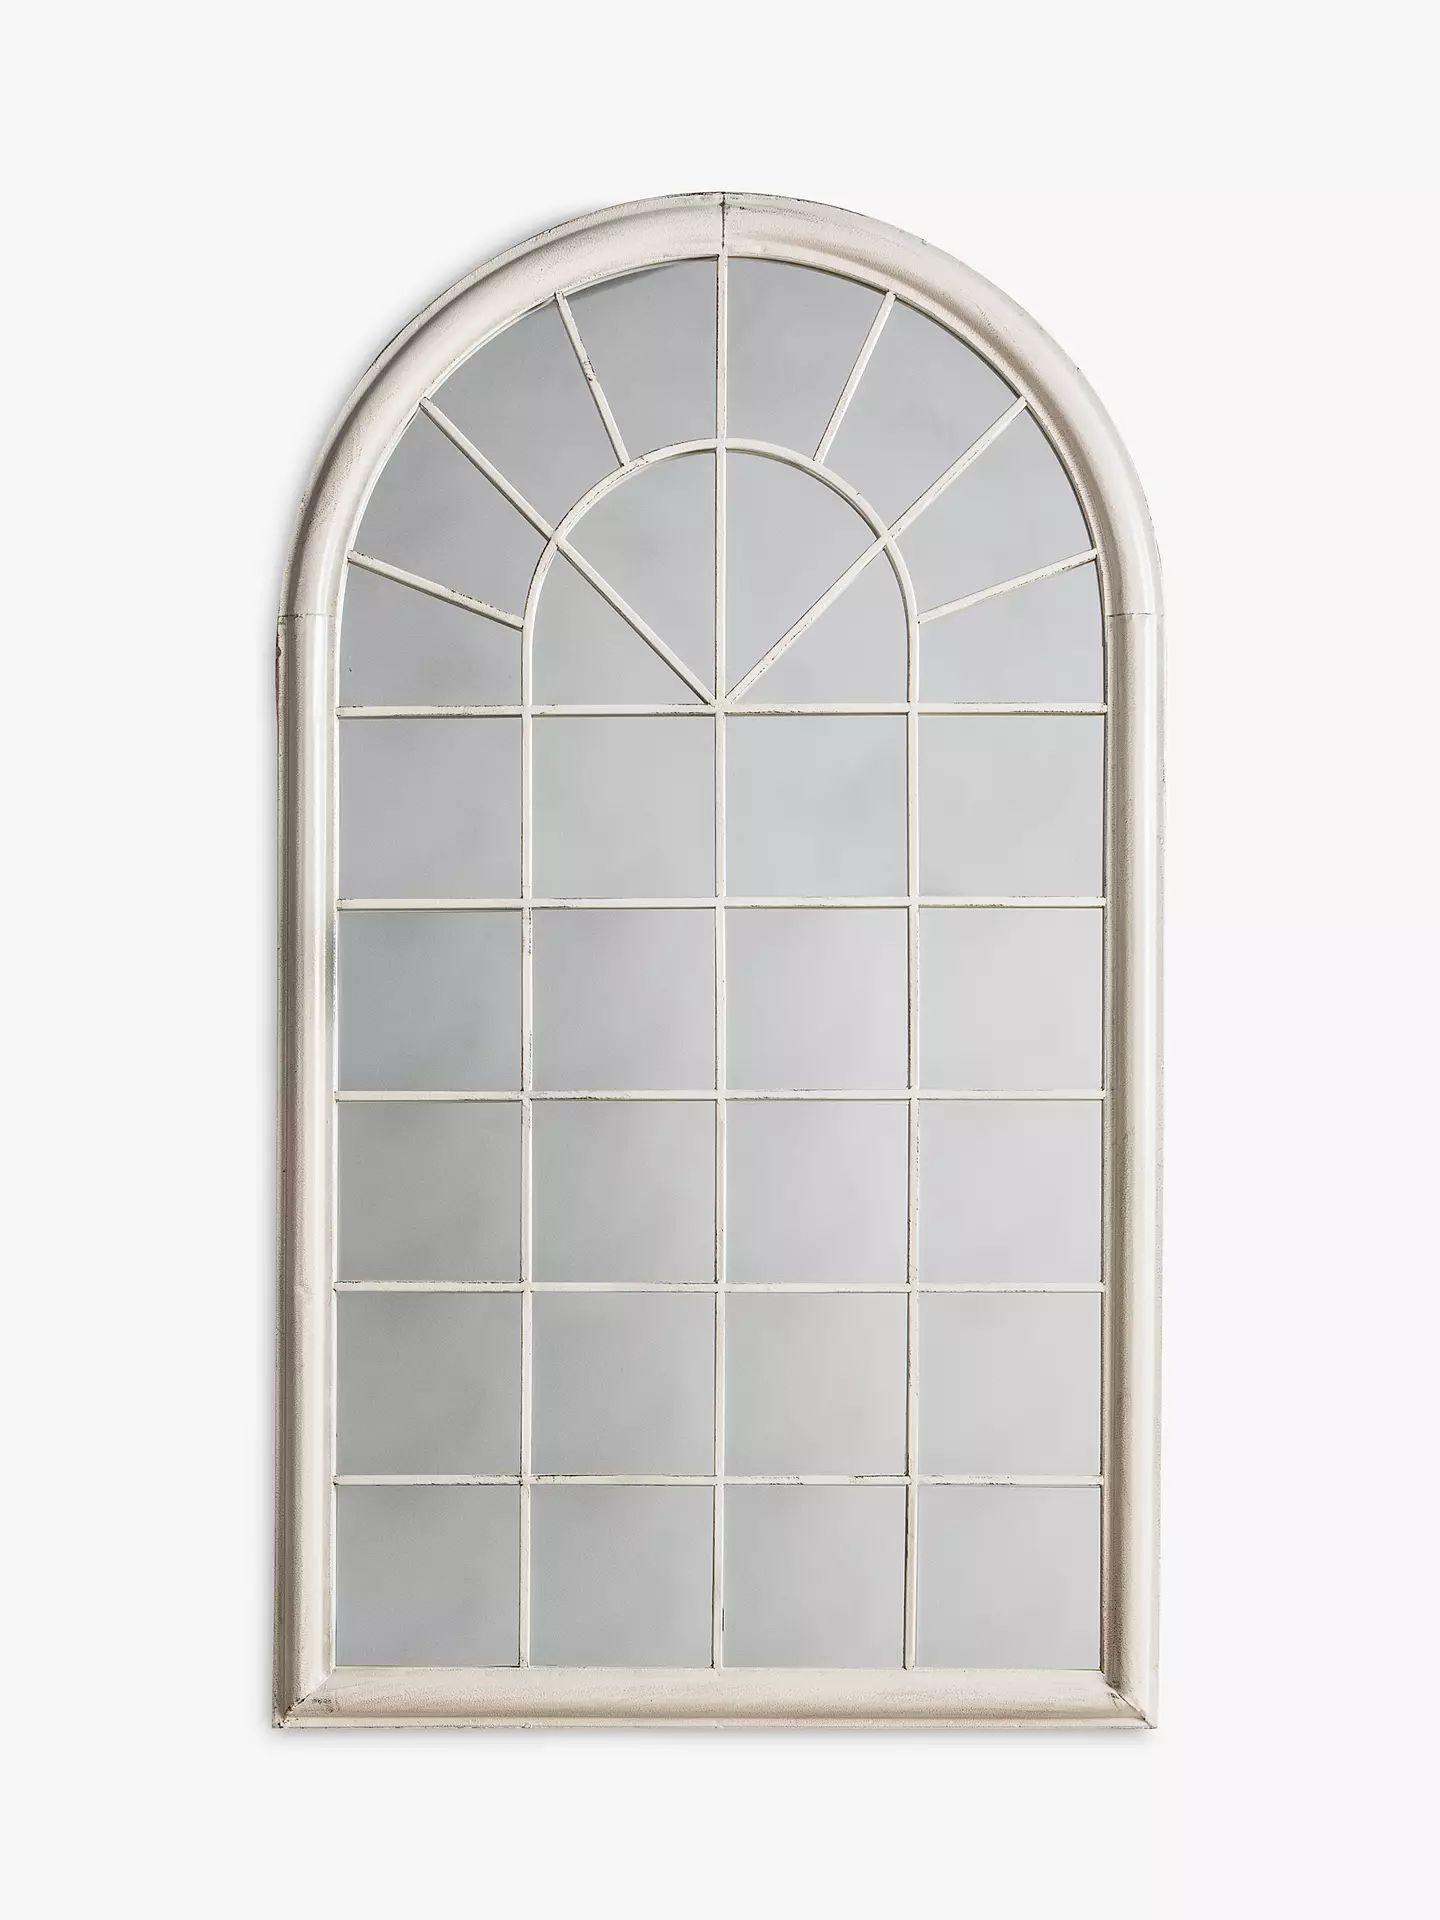 Fura Outdoor Garden Wall Window Style Arched Mirror, 131 x 75cm, Antique Cream | John Lewis UK